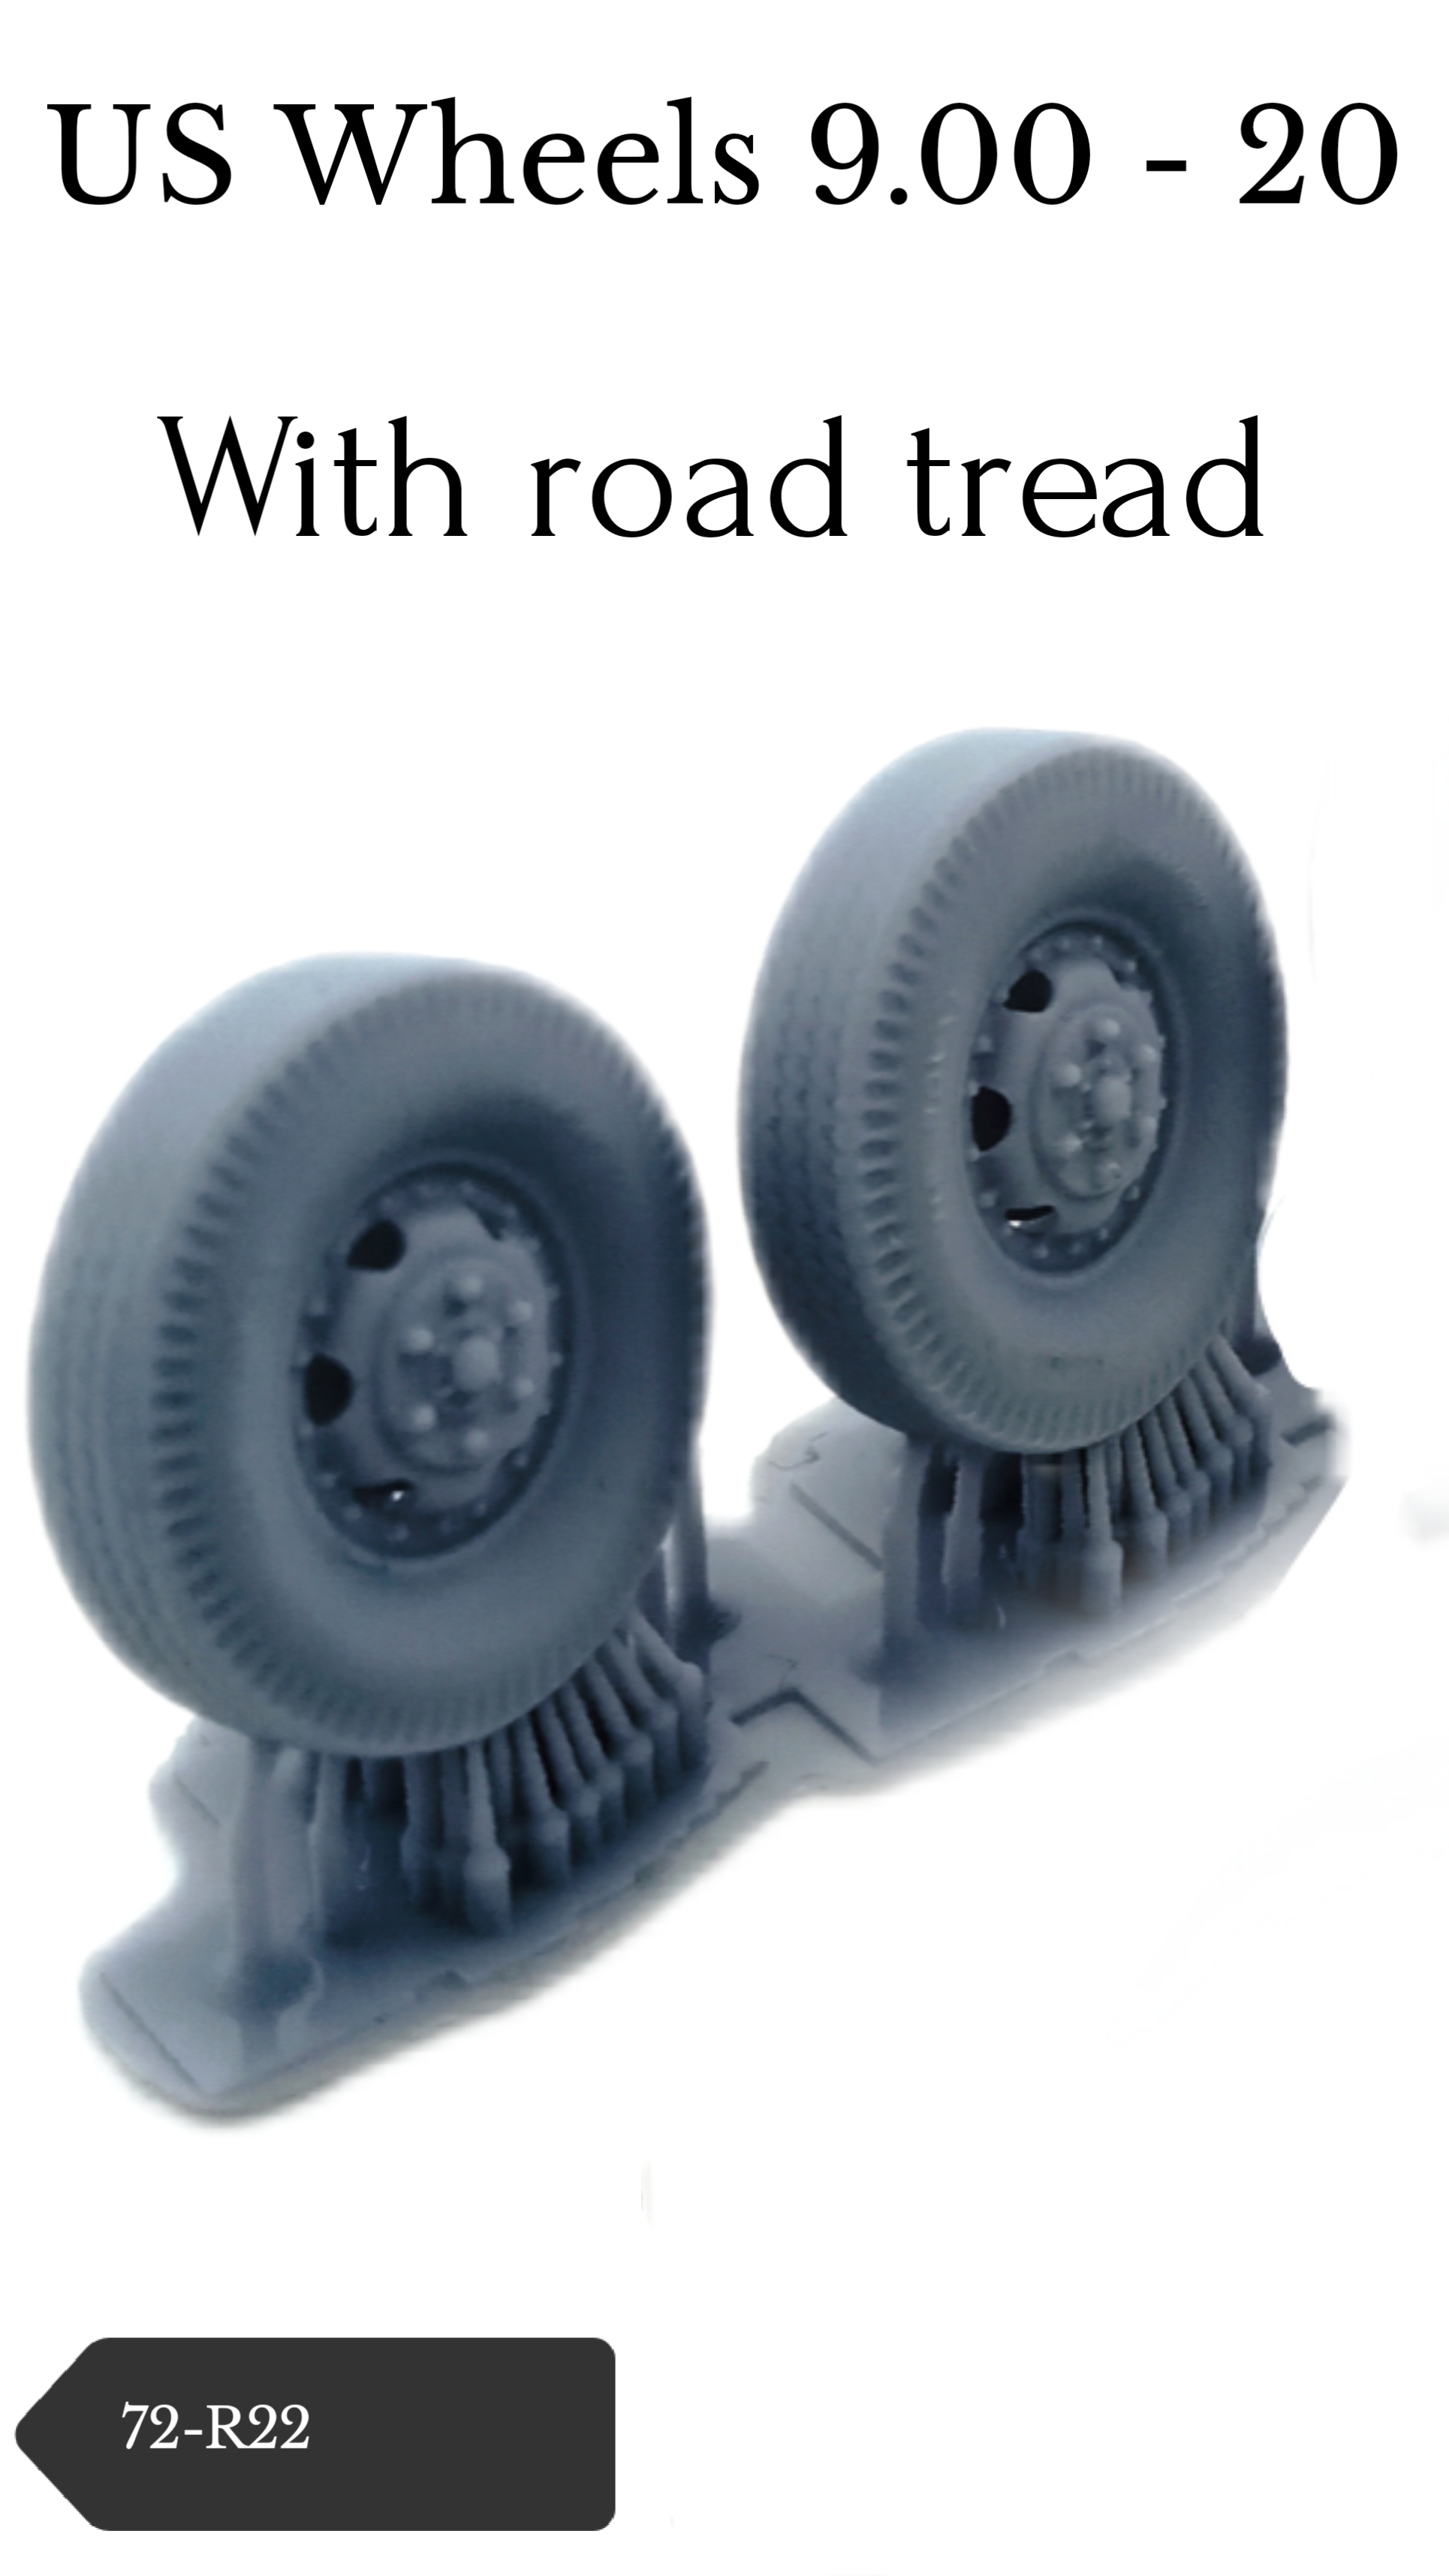 U.S. wheels 9.00-20 with road tyre pattern